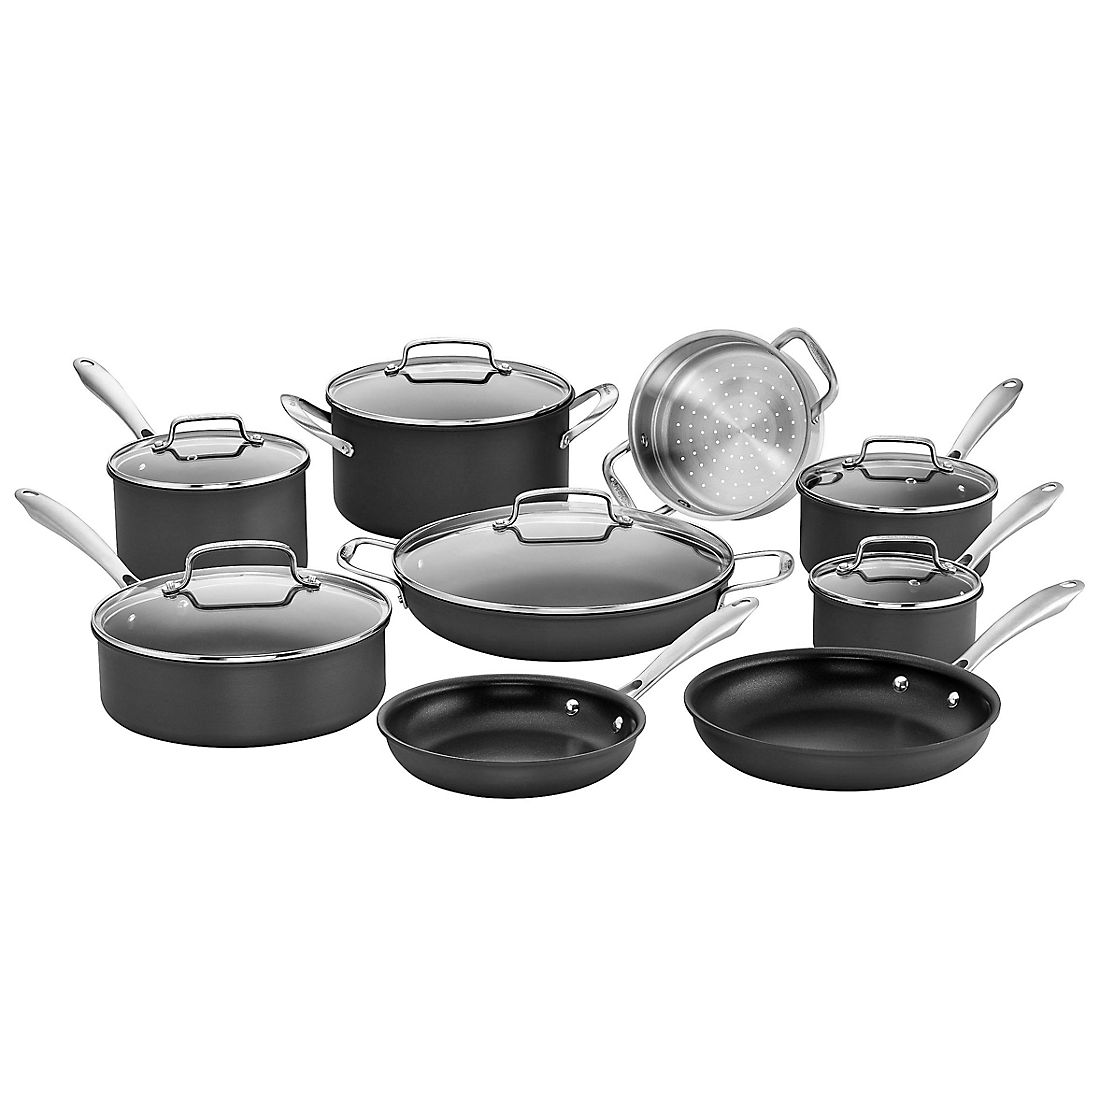 Cuisinart Professional Non-Stick Hard Anodized 15-Pc Cookware Set